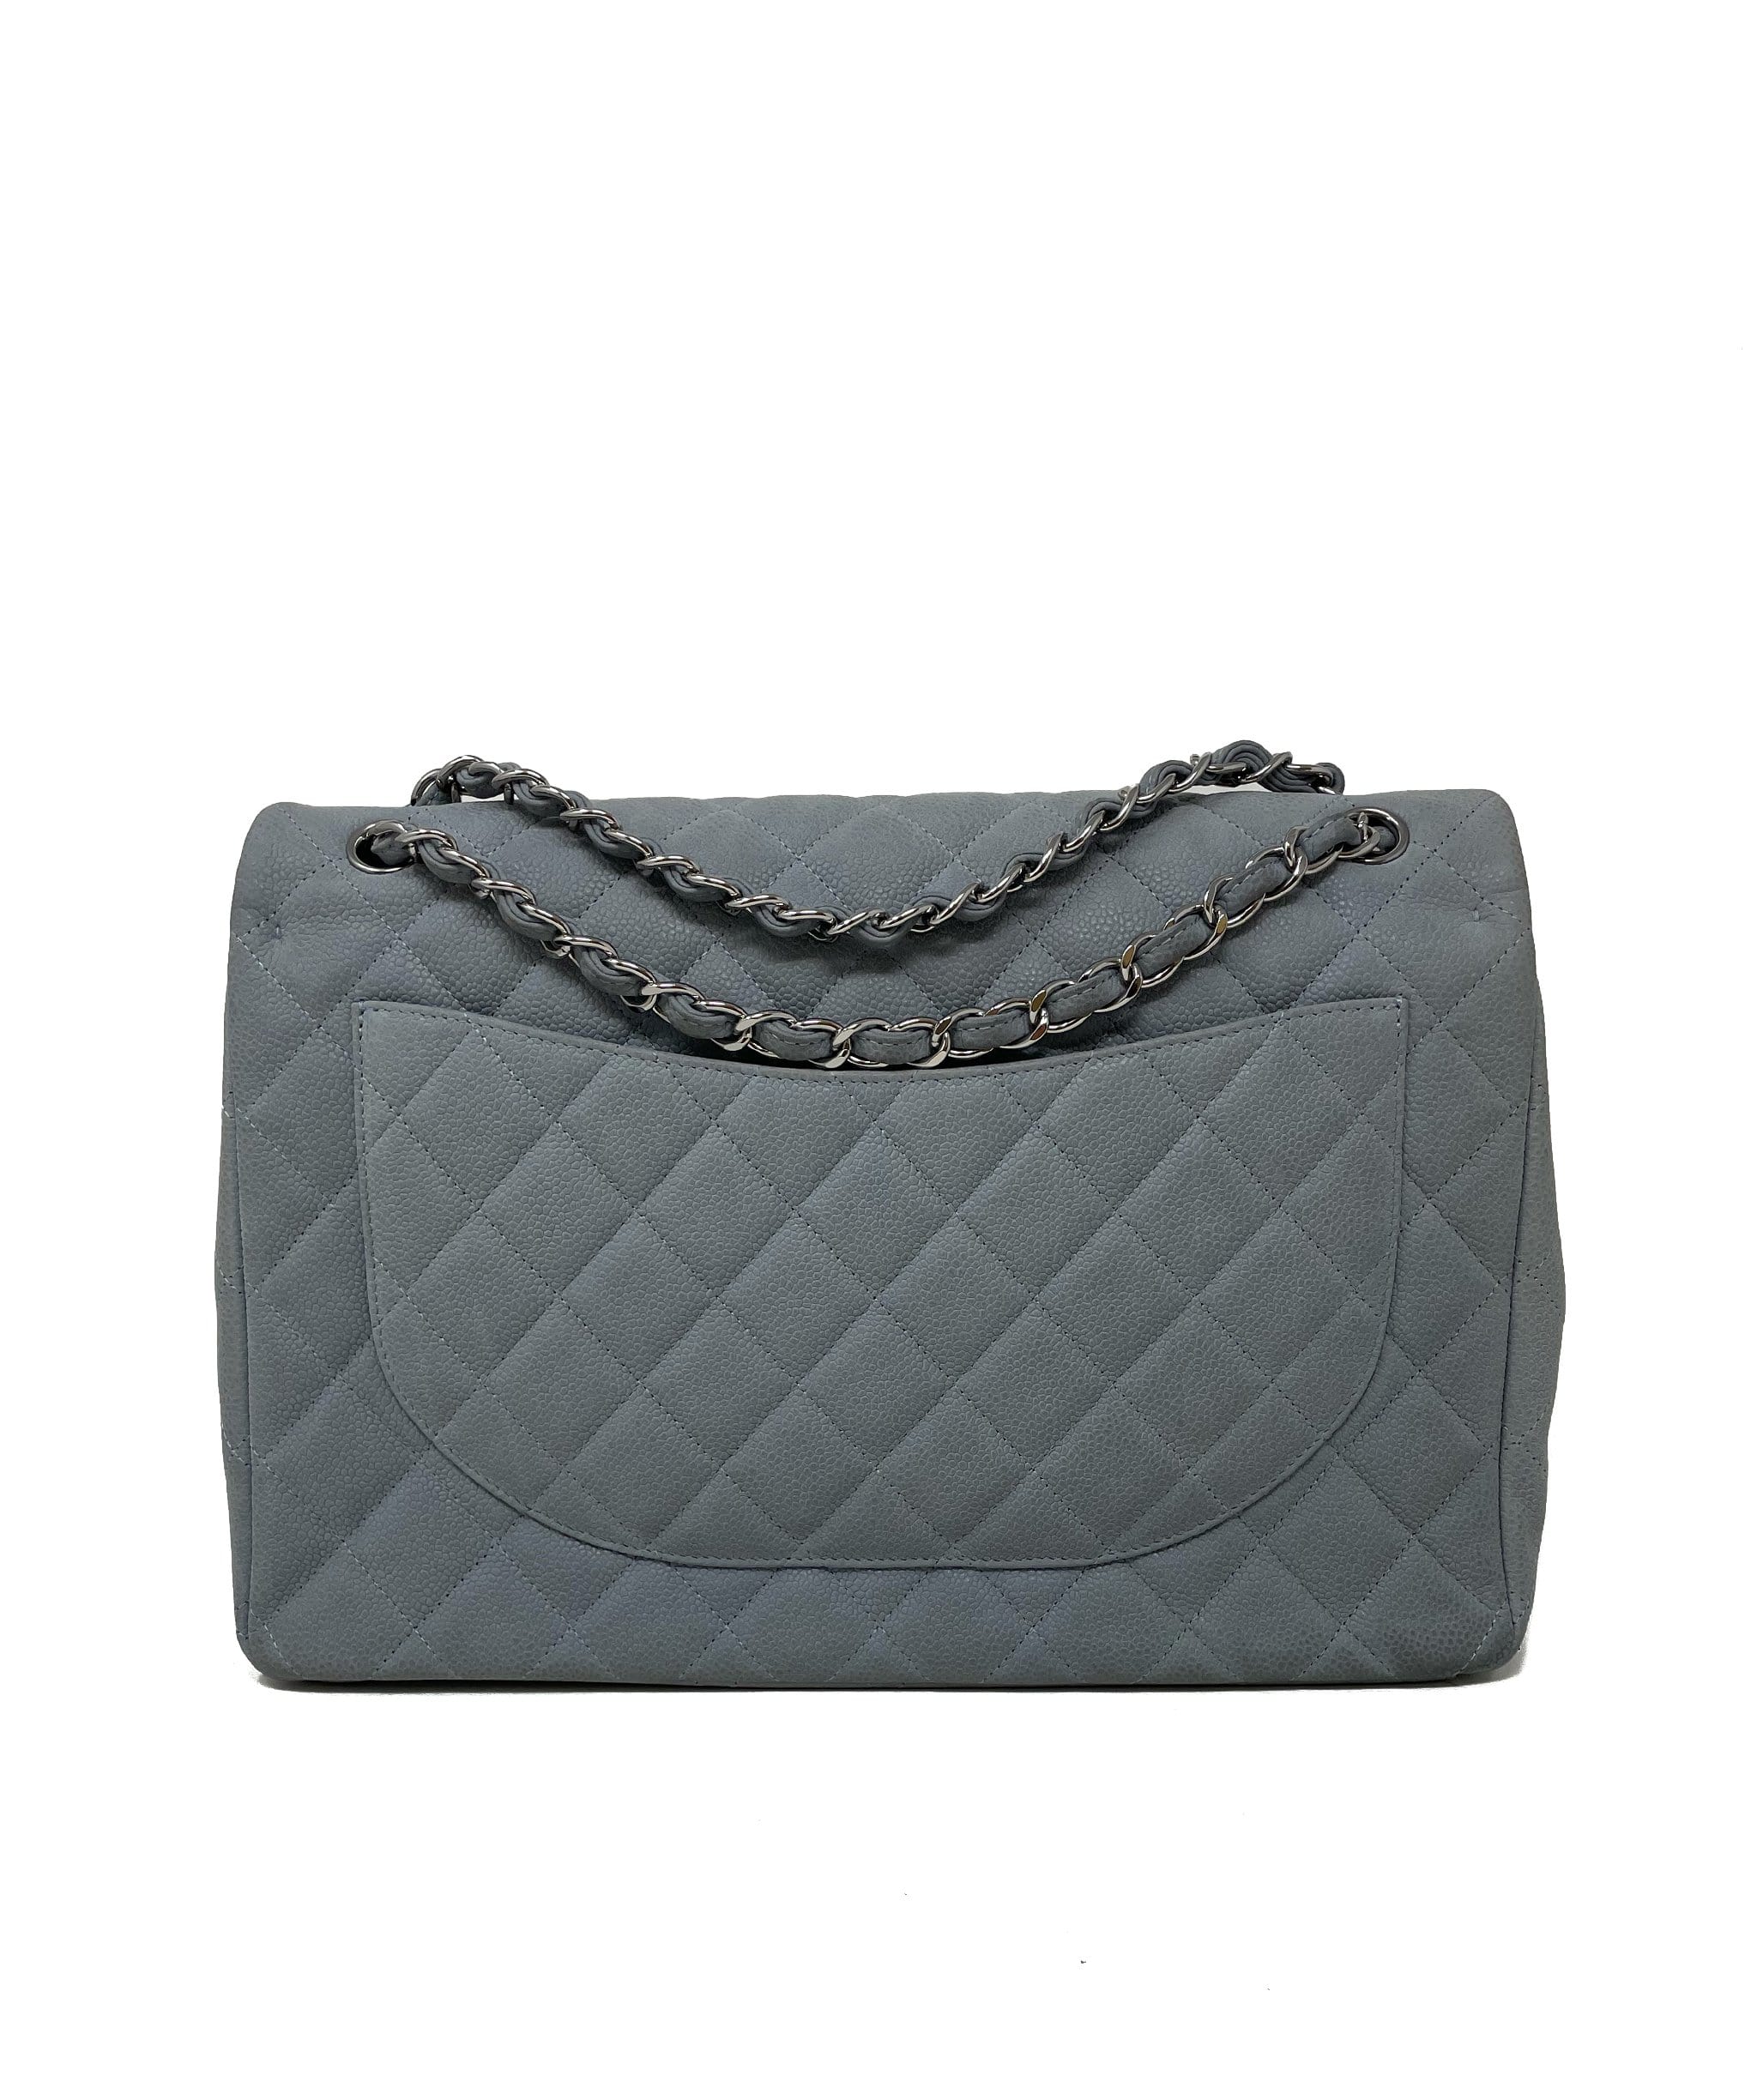 Chanel Chanel Maxi Double flap Caviar bag - ADL1337